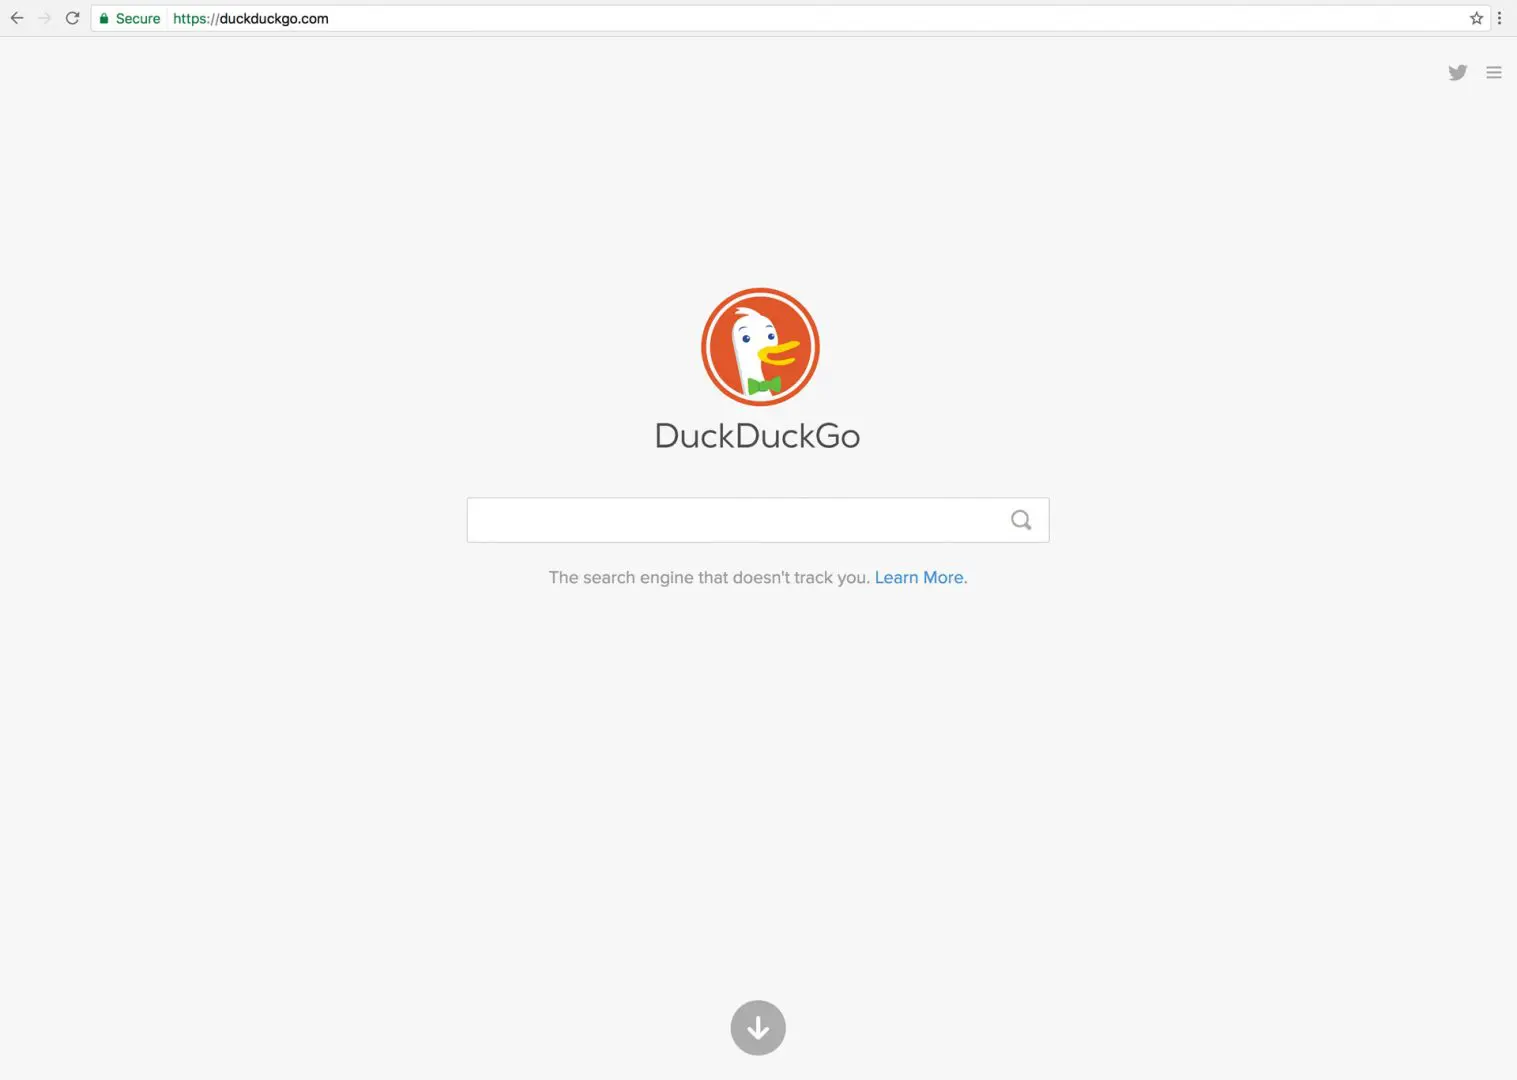 Apple's New Search Engine DuckDuckGo